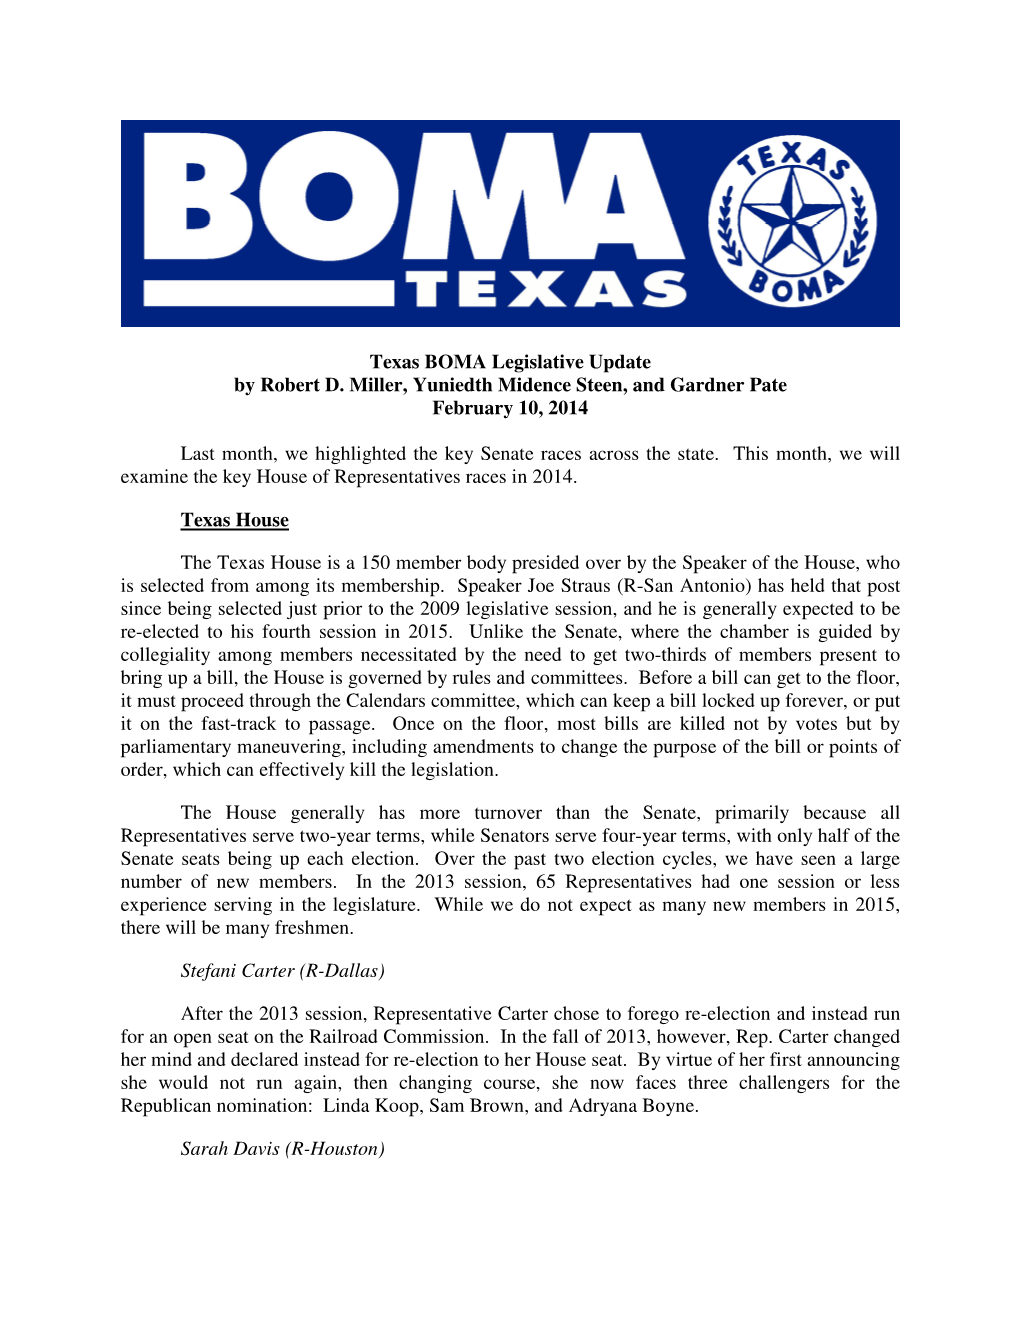 Texas BOMA Legislative Update by Robert D. Miller, Yuniedth Midence Steen, and Gardner Pate February 10, 2014